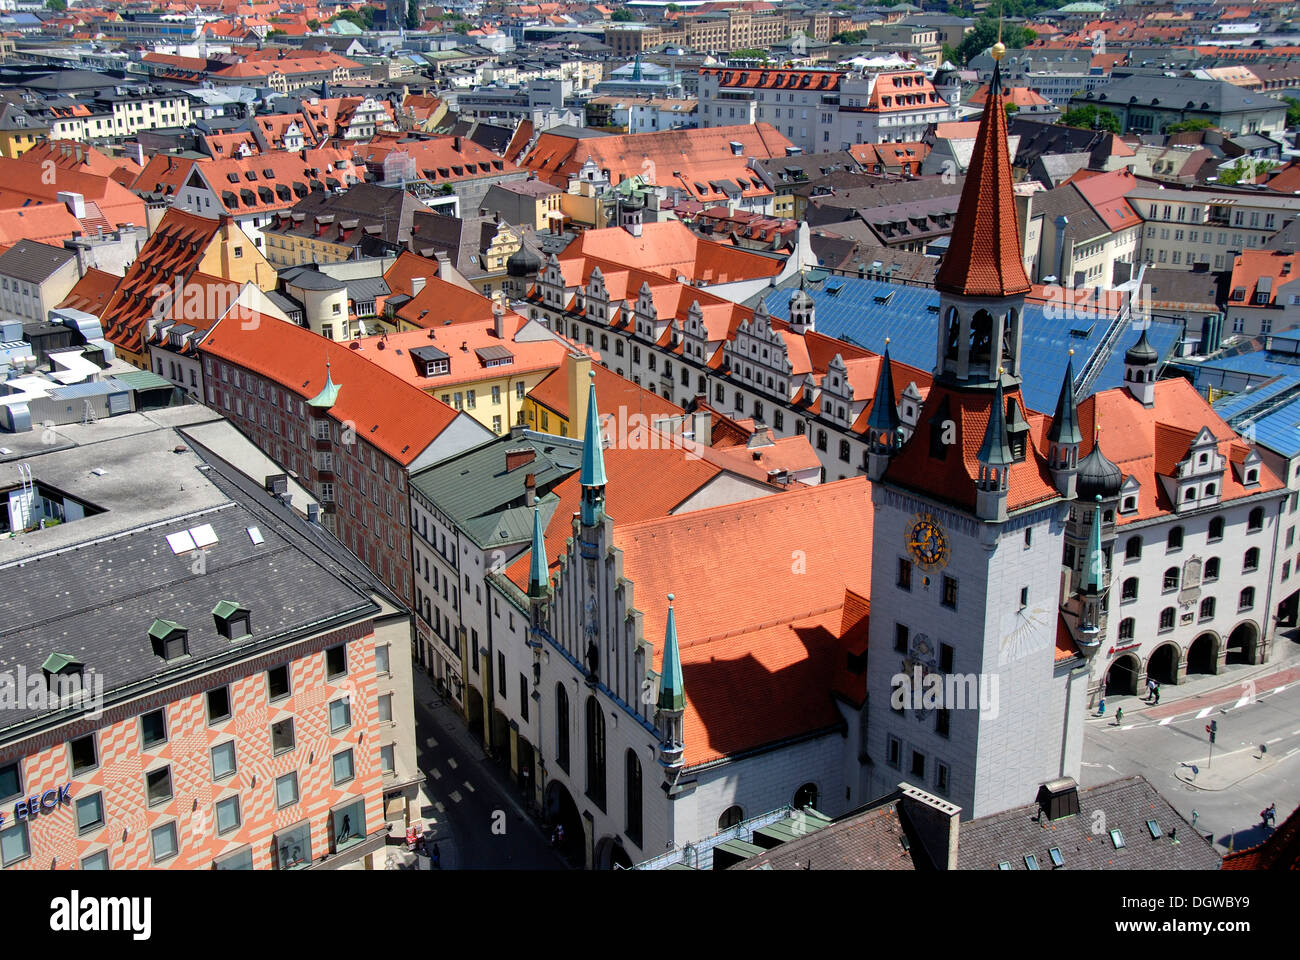 Blick vom Turm "Alter Peter", St. Peter, Dächer, Stadtzentrum, altes Rathaus, Talburgtor Tor, Heilig-Geist-Kirche Stockfoto